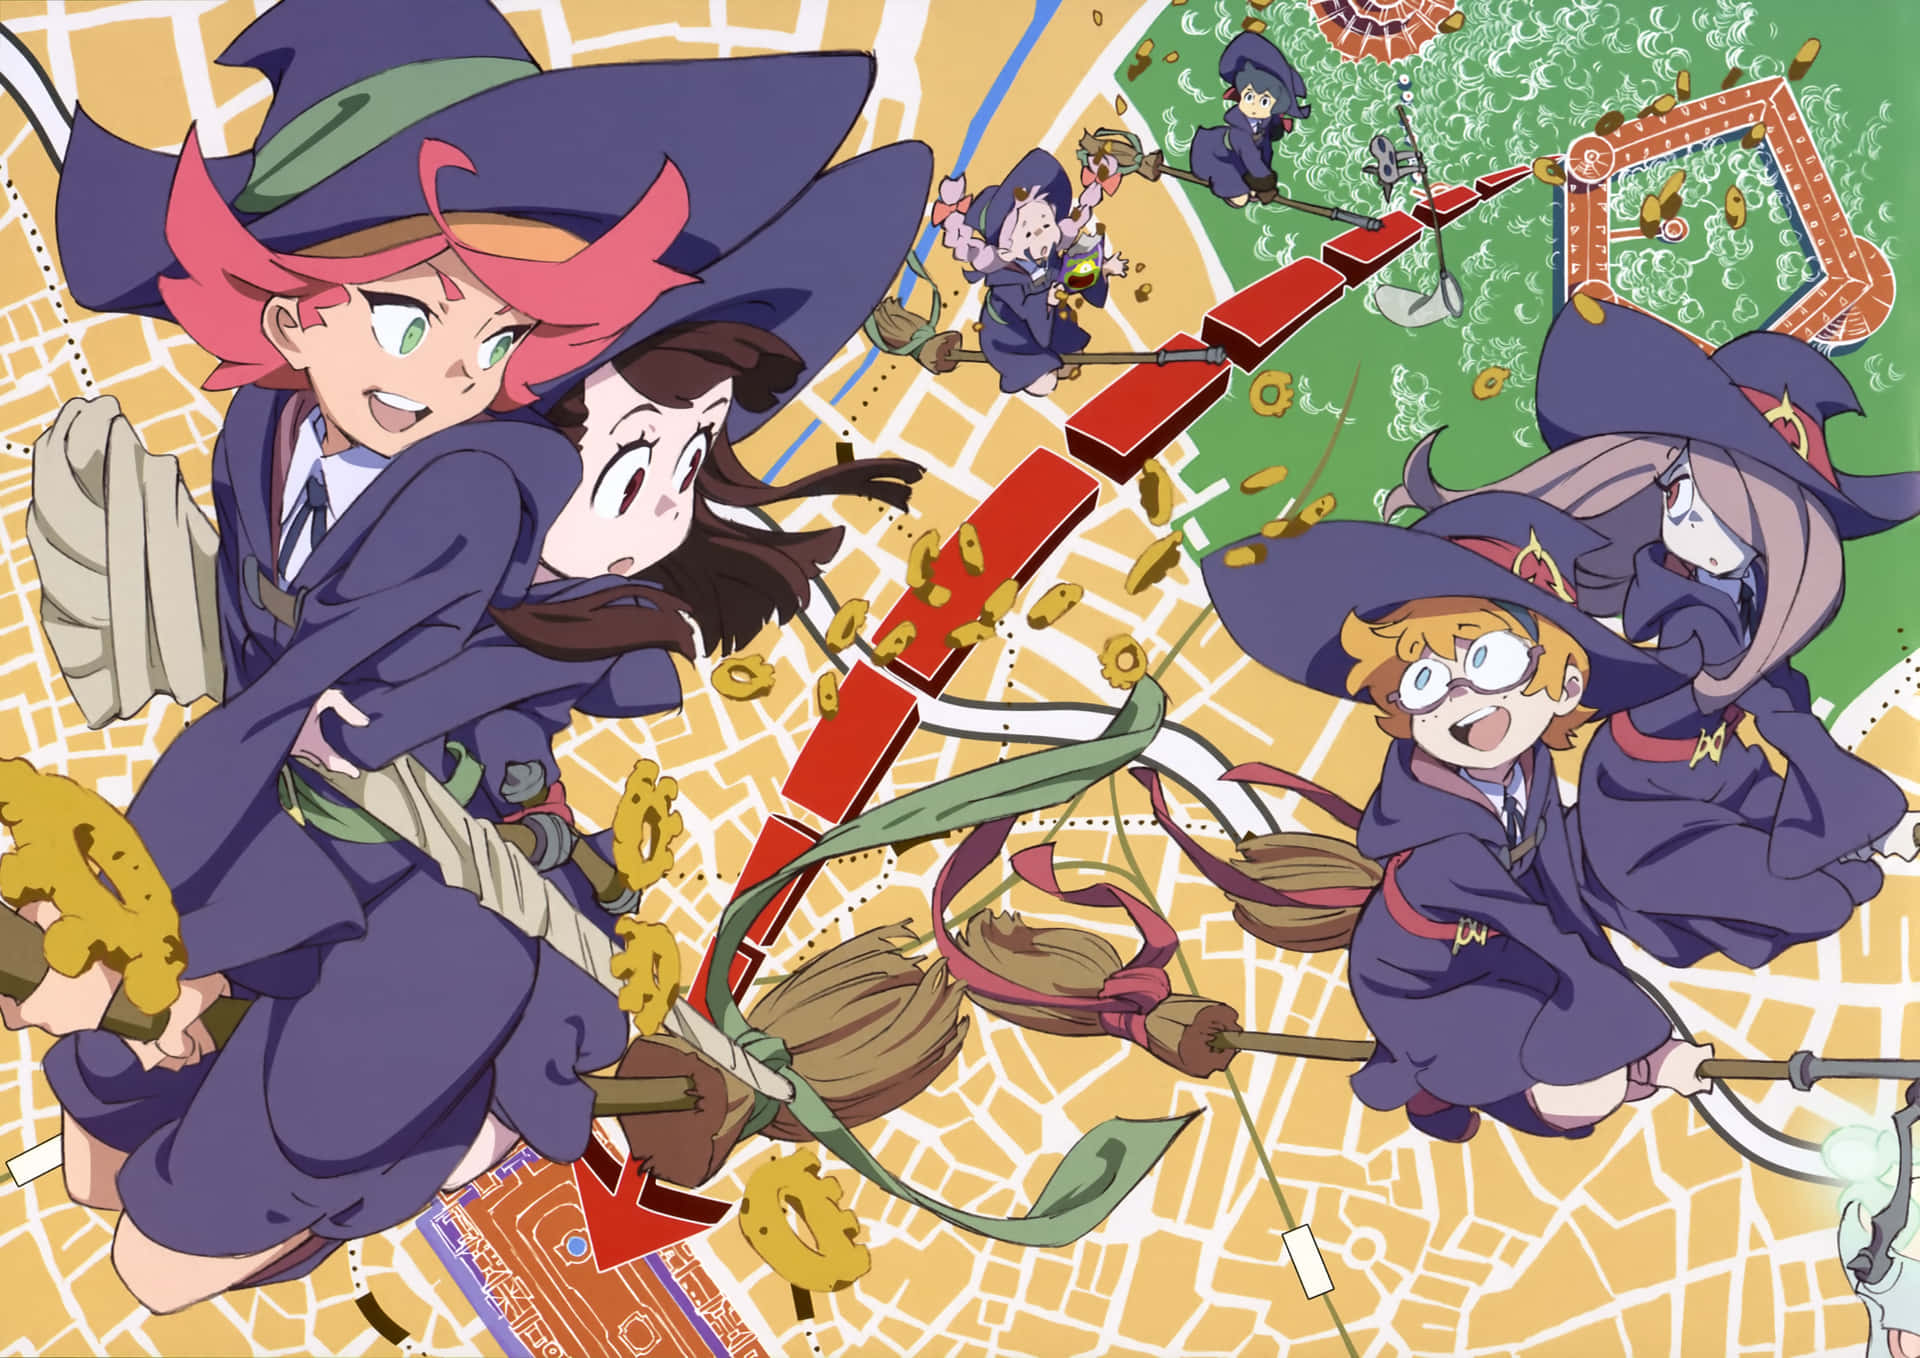 Personagensde Little Witch Academia Voando Sobre O Mapa. Papel de Parede